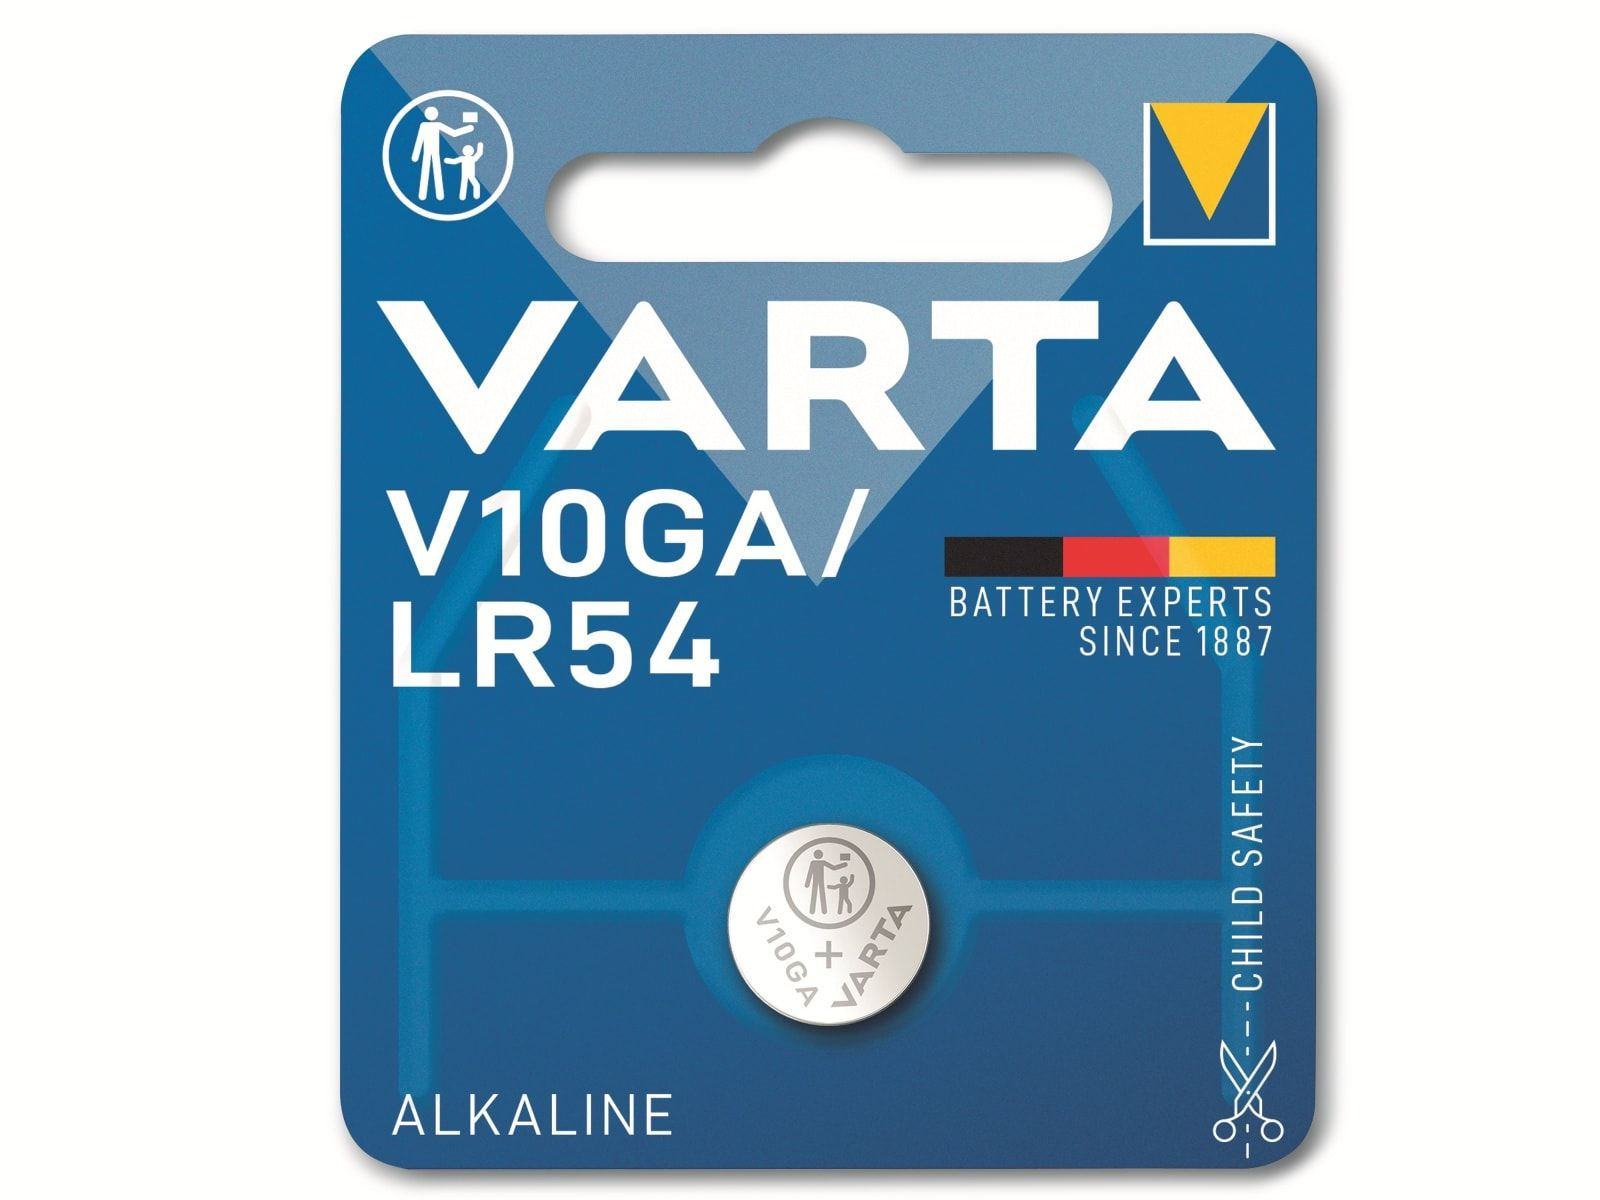 VARTA Electronics V10GA LR54 Ah Fotobatterie (1er 0.05 1.5 Fotobatterie, Mando Volt, Distancia 1,5V Blister) AlMn